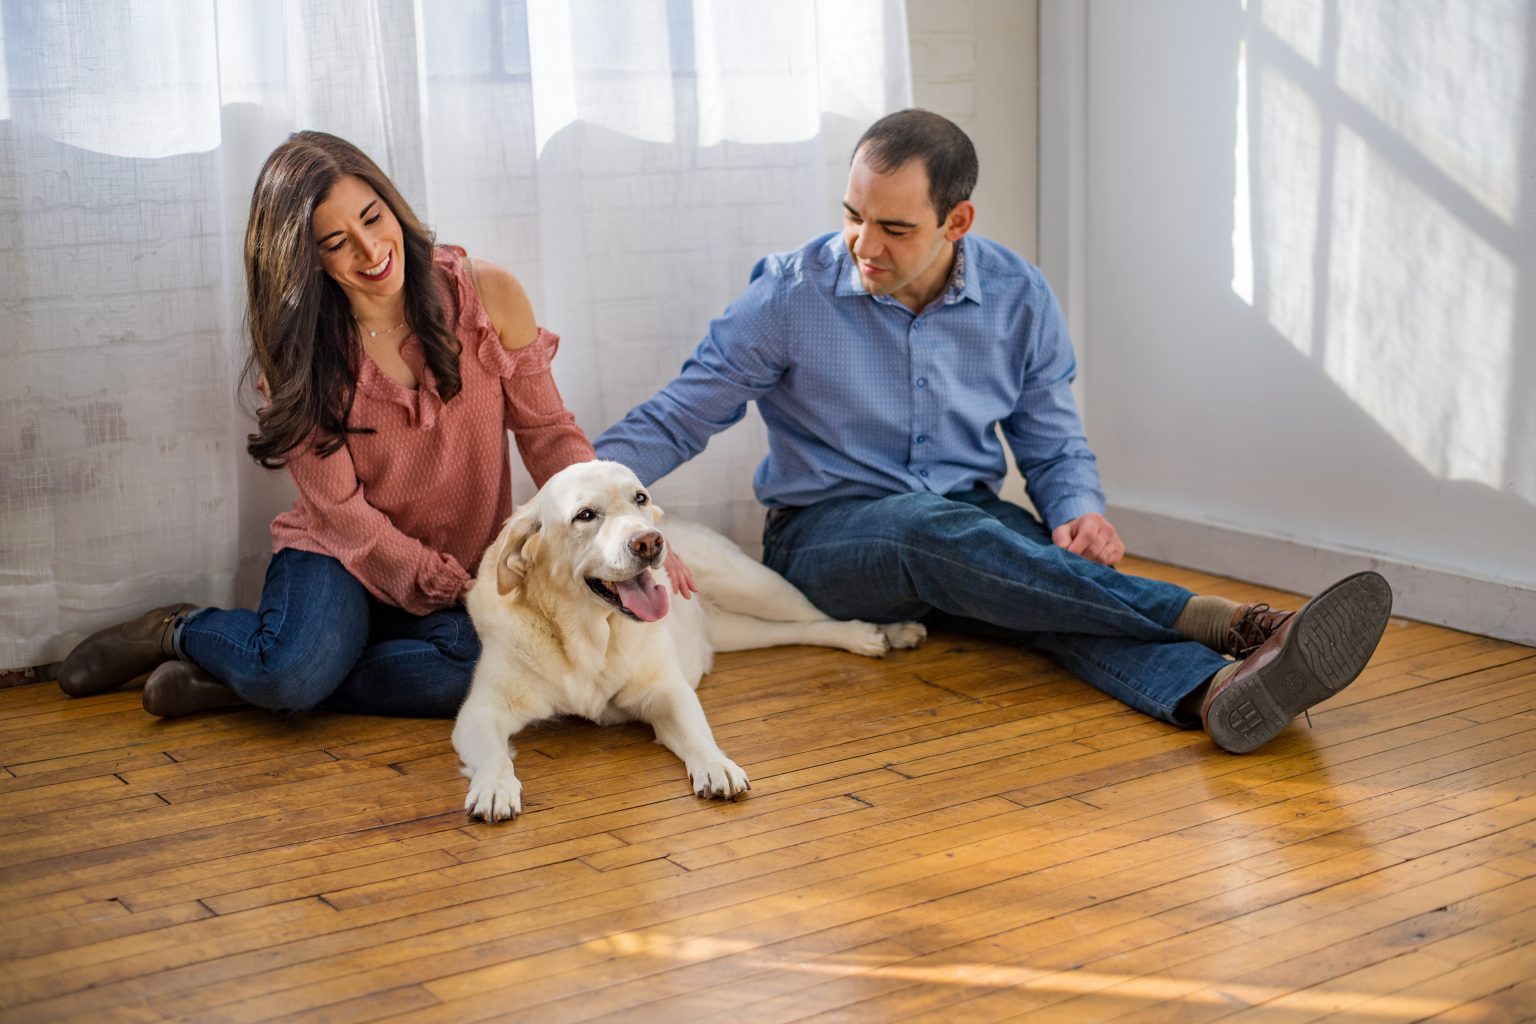 Man and Woman sitting on floor with dog. Senior dog Portait